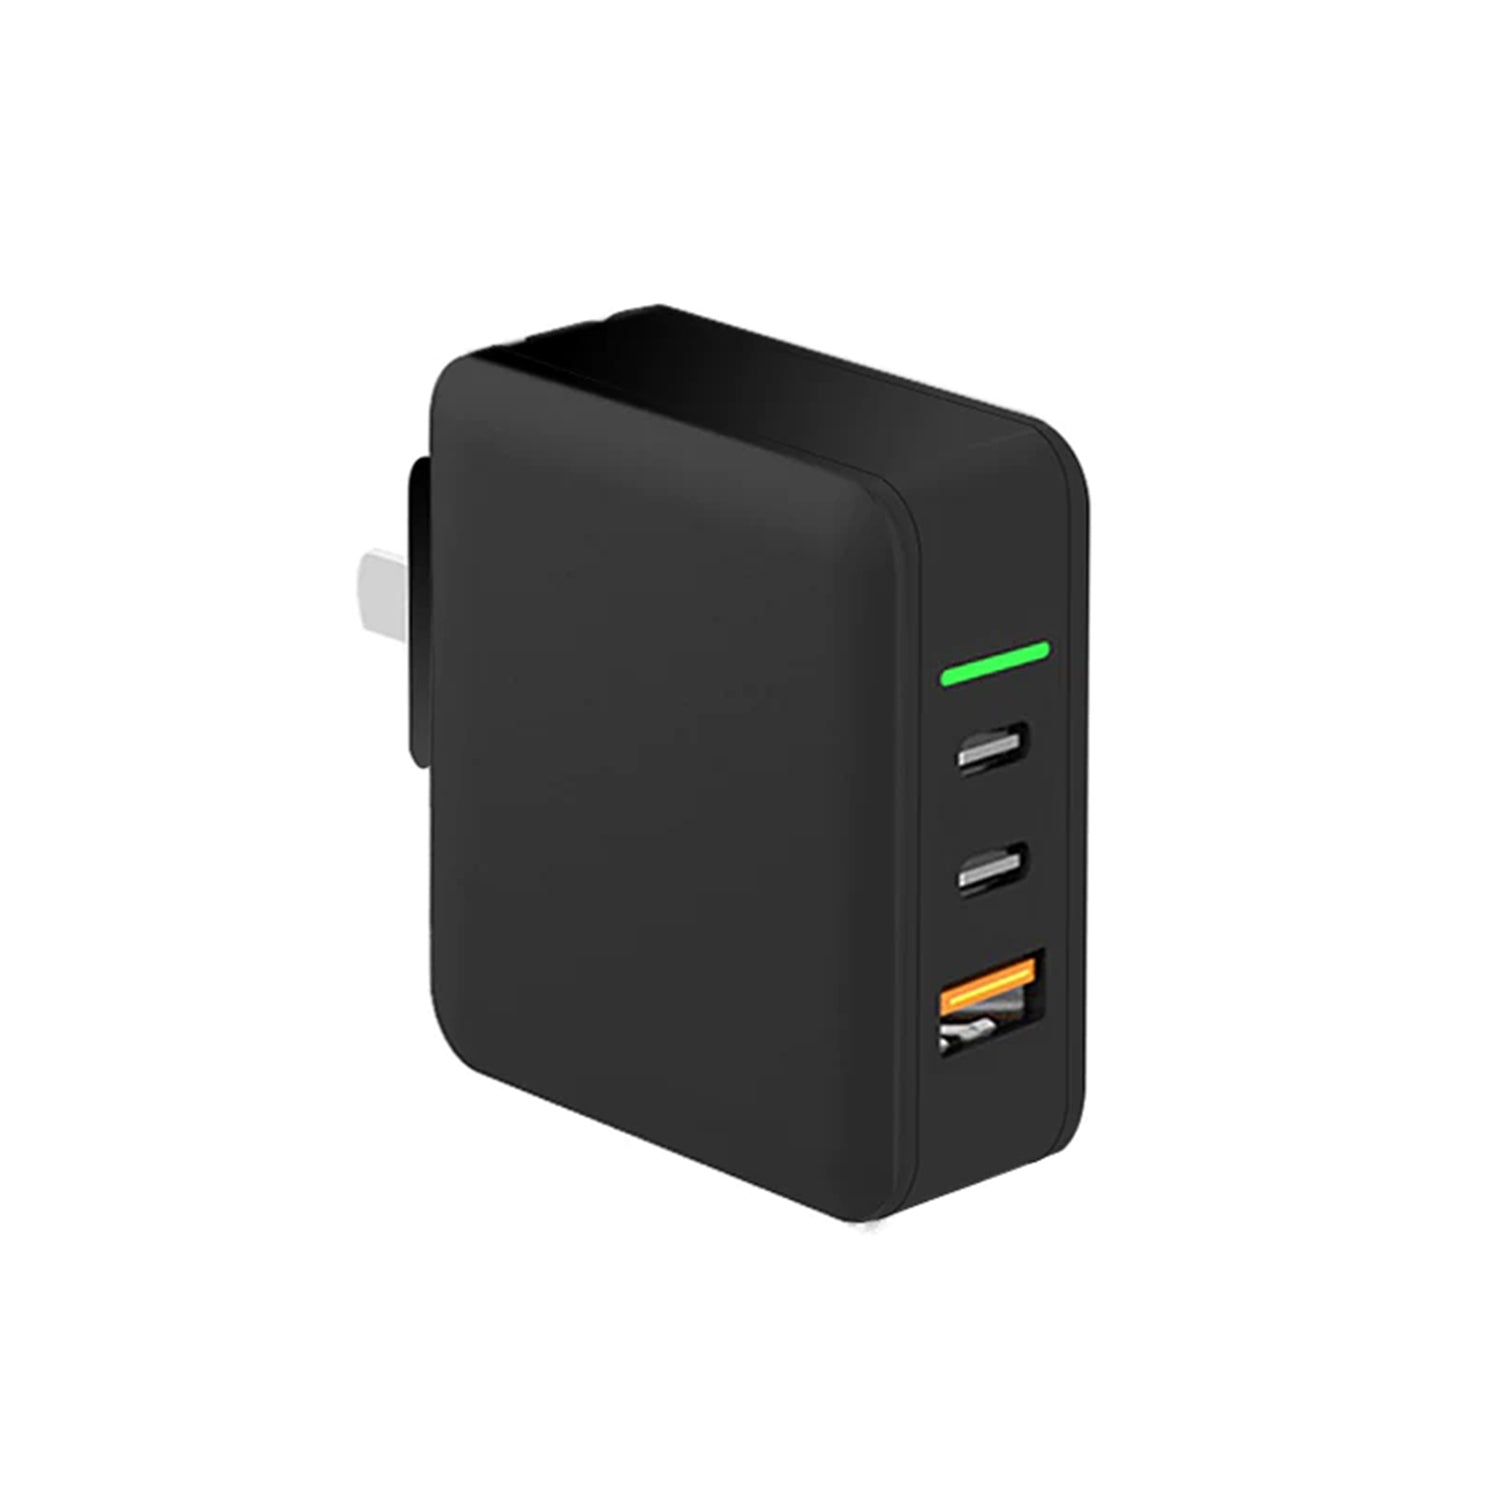 3 Ports(2 type-c ports+1 USB port) 65W mini MacBook fast charger adapter